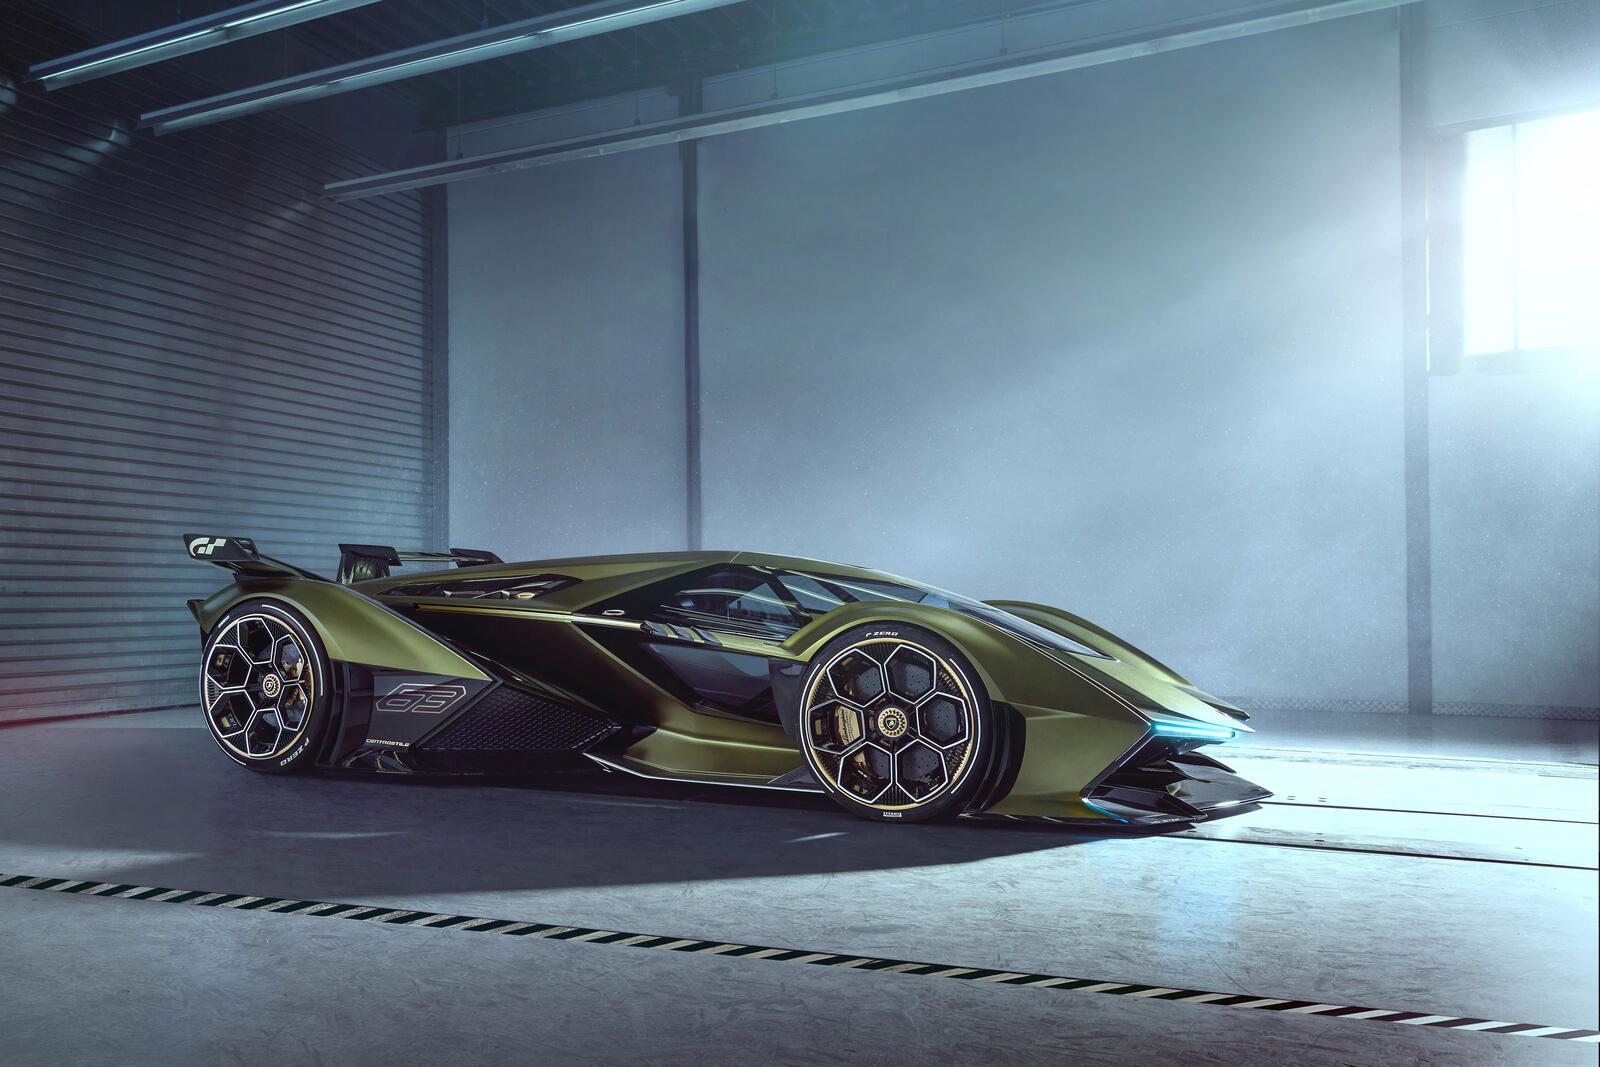 Wallpapers Lamborghini Vision Gran Turismo cars cars 2020 year on the desktop